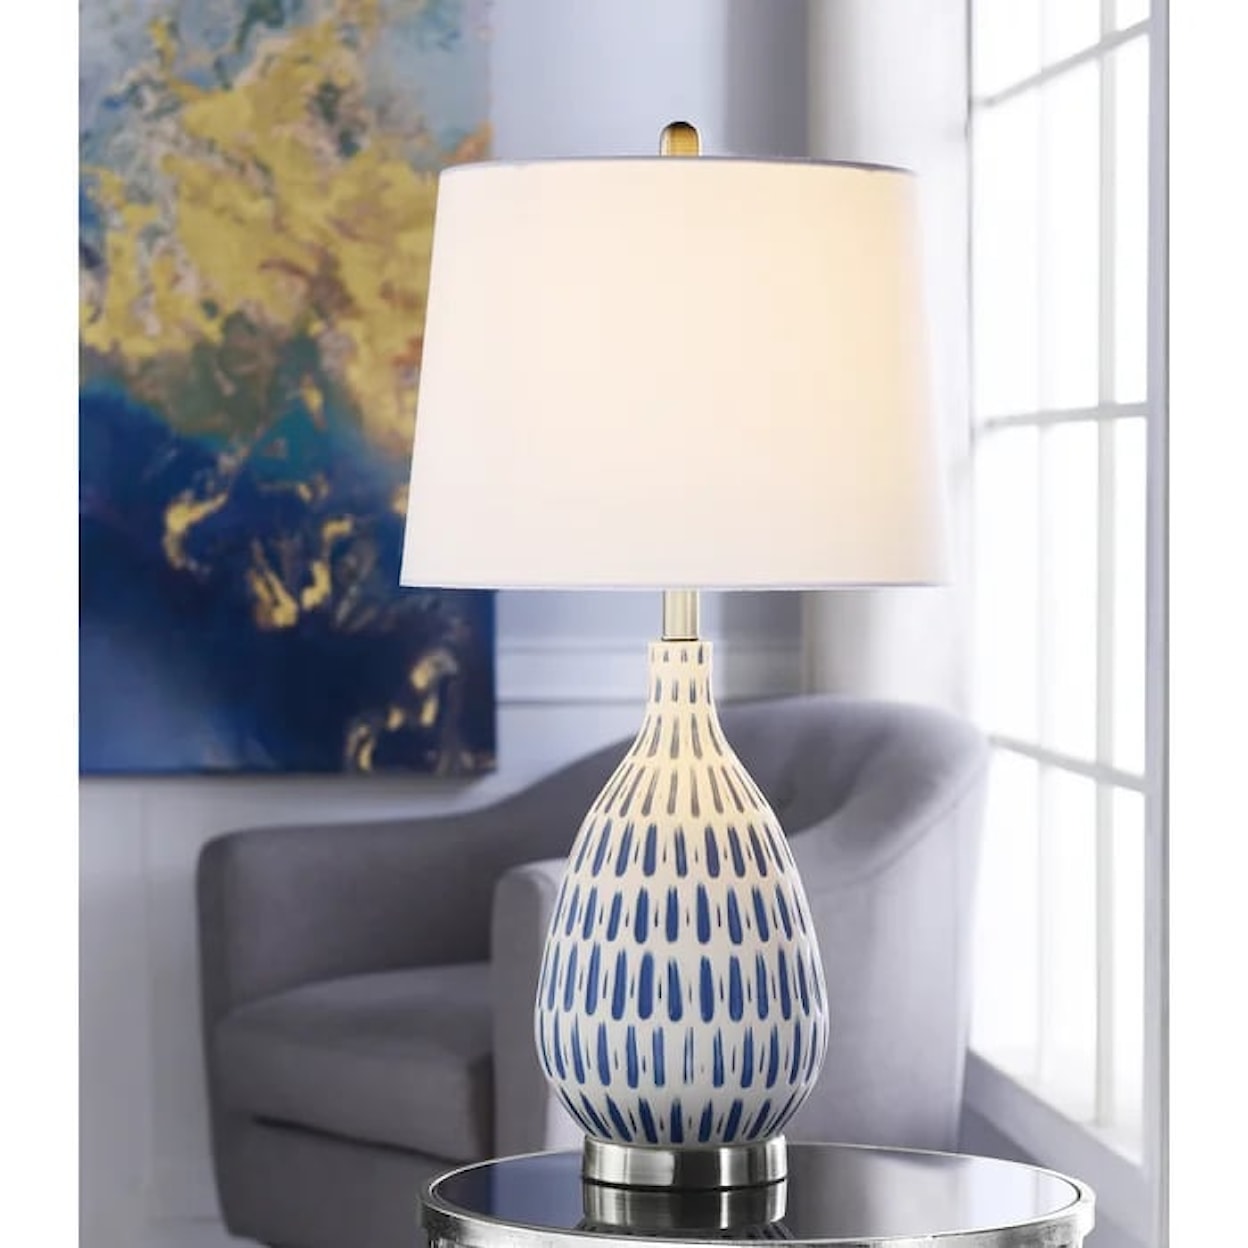 StyleCraft Accessories Cobalt & White Table Lamp